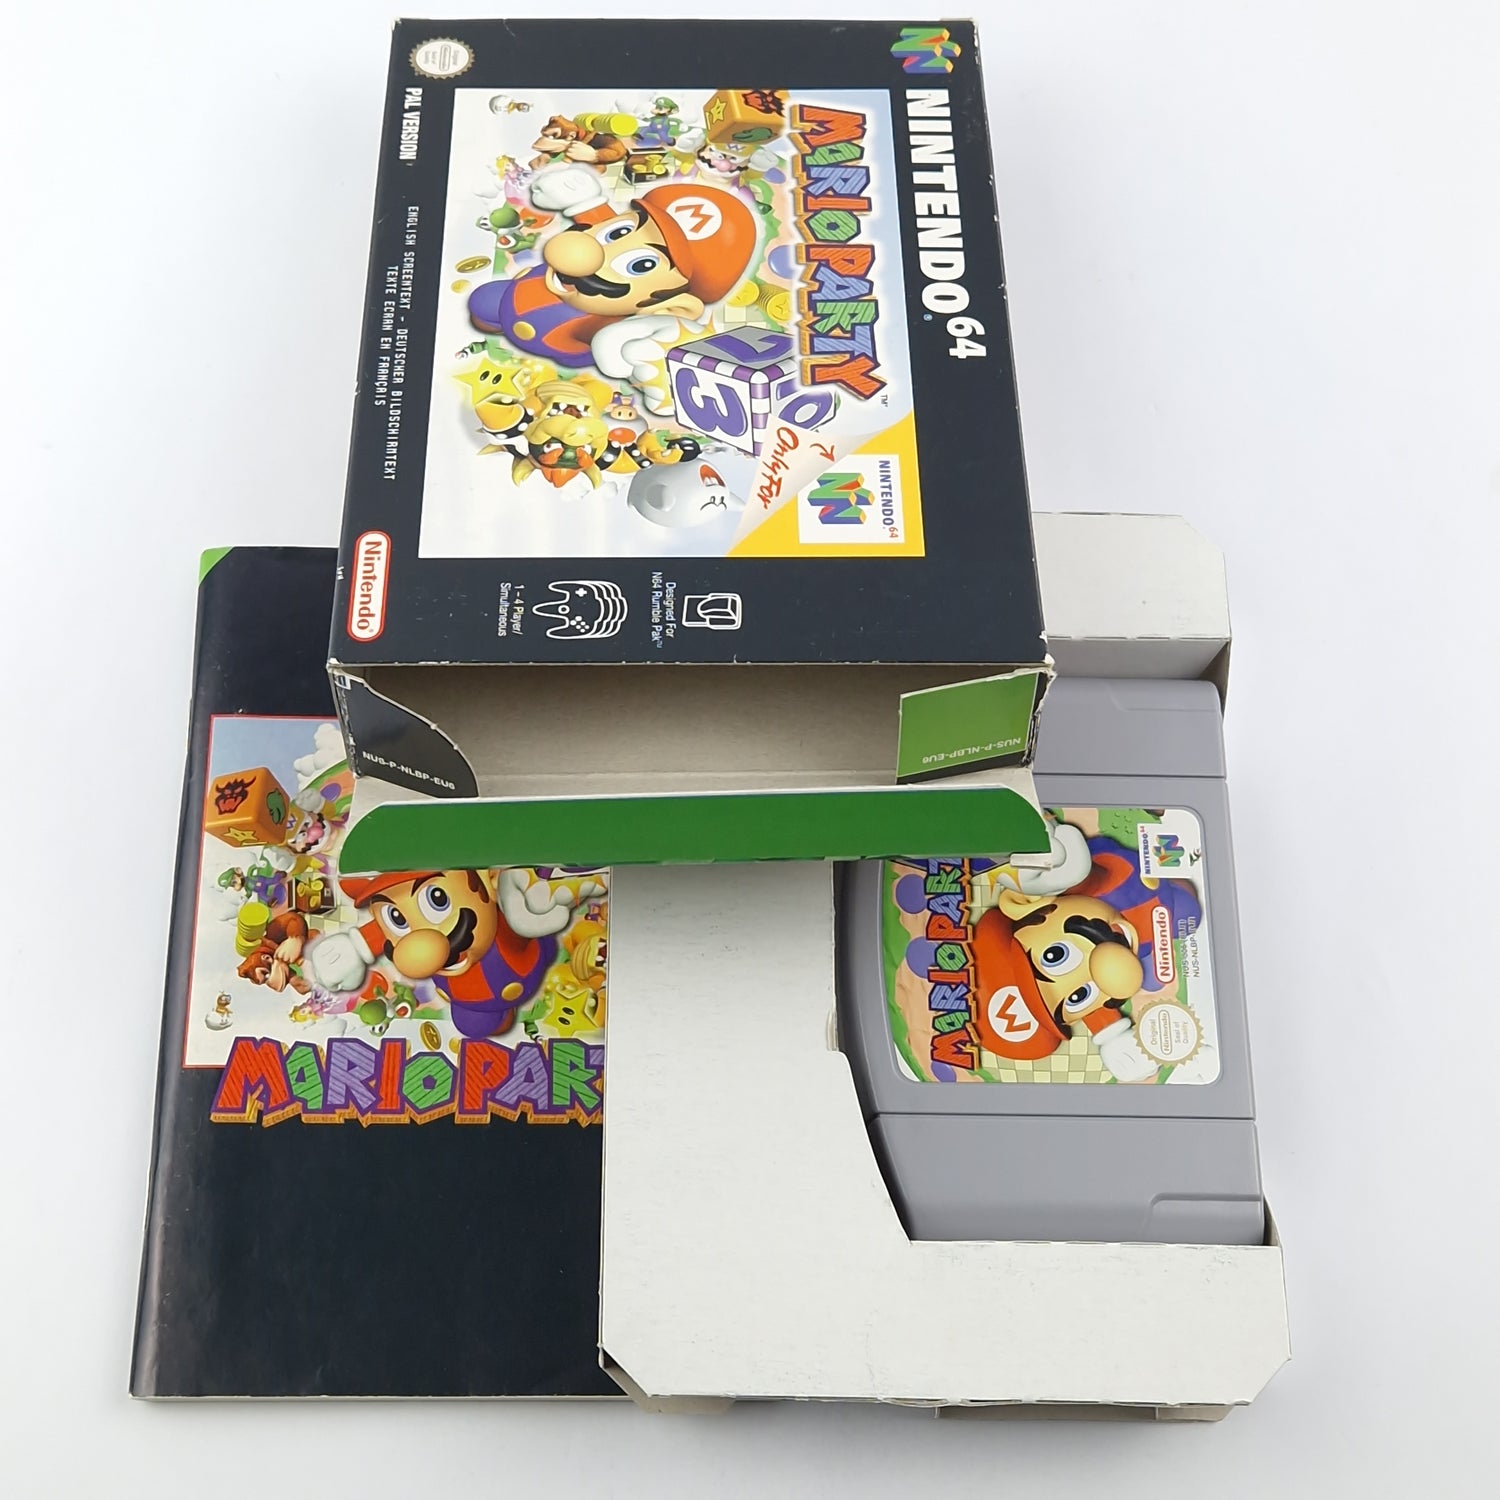 Nintendo 64 Game: Mario Party - Module Instructions OVP cib / N64 PAL Version